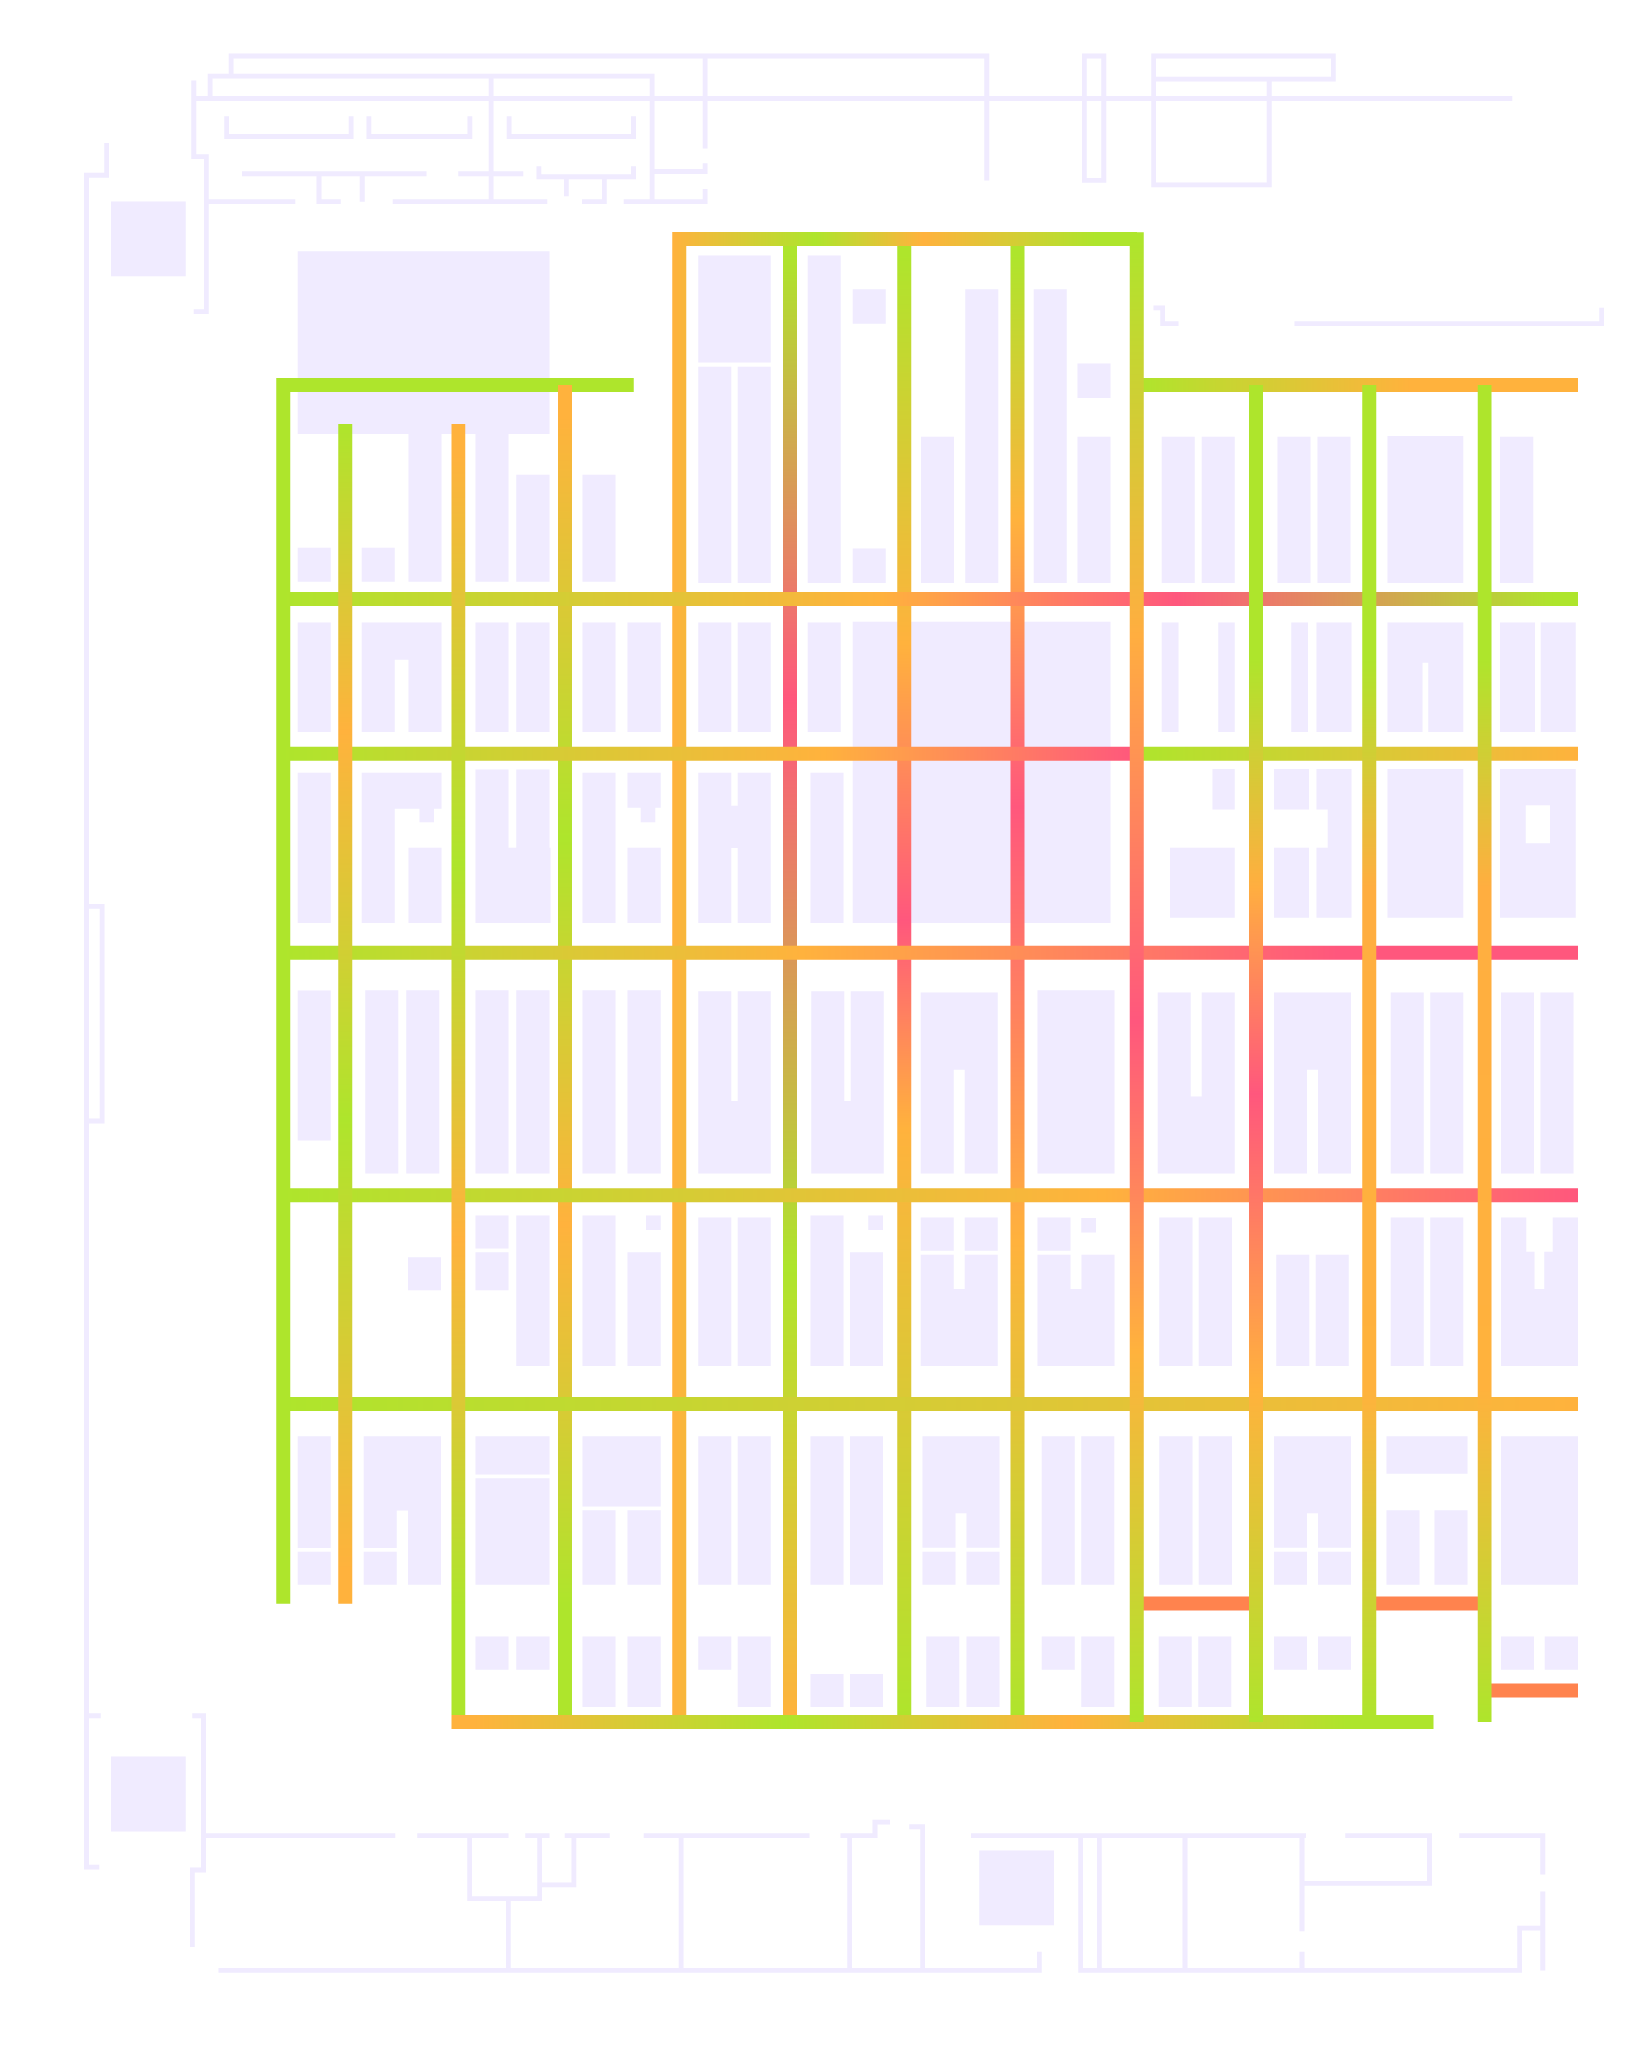 Heatmap of a floor plan